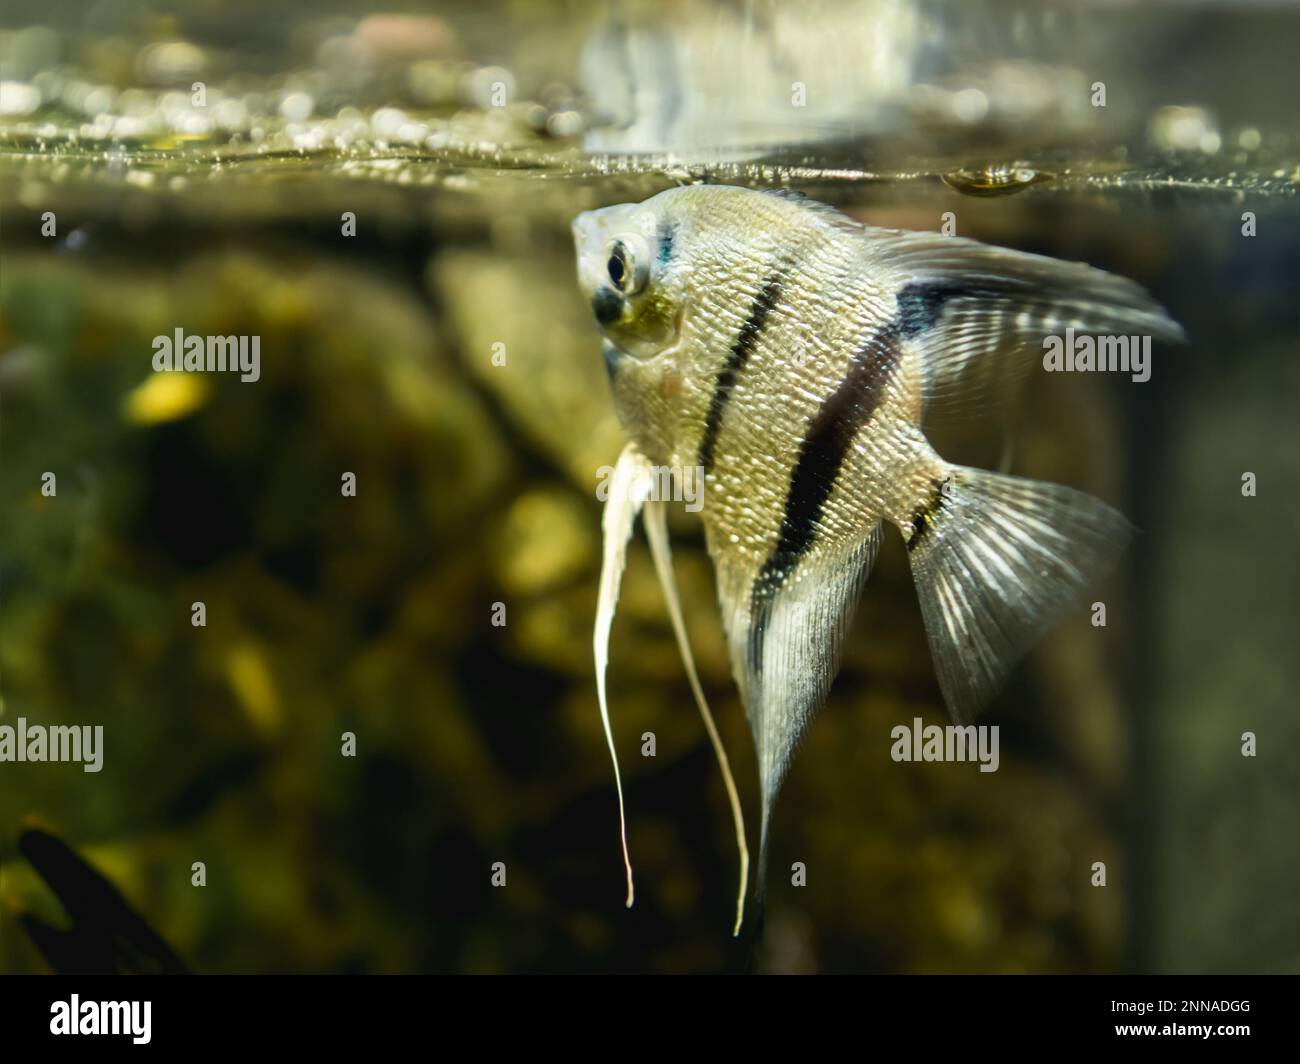 Floating Pterophyllum scalare or angelfish in tank. Freshwater aquarium fish with shiny scales. Stock Photo